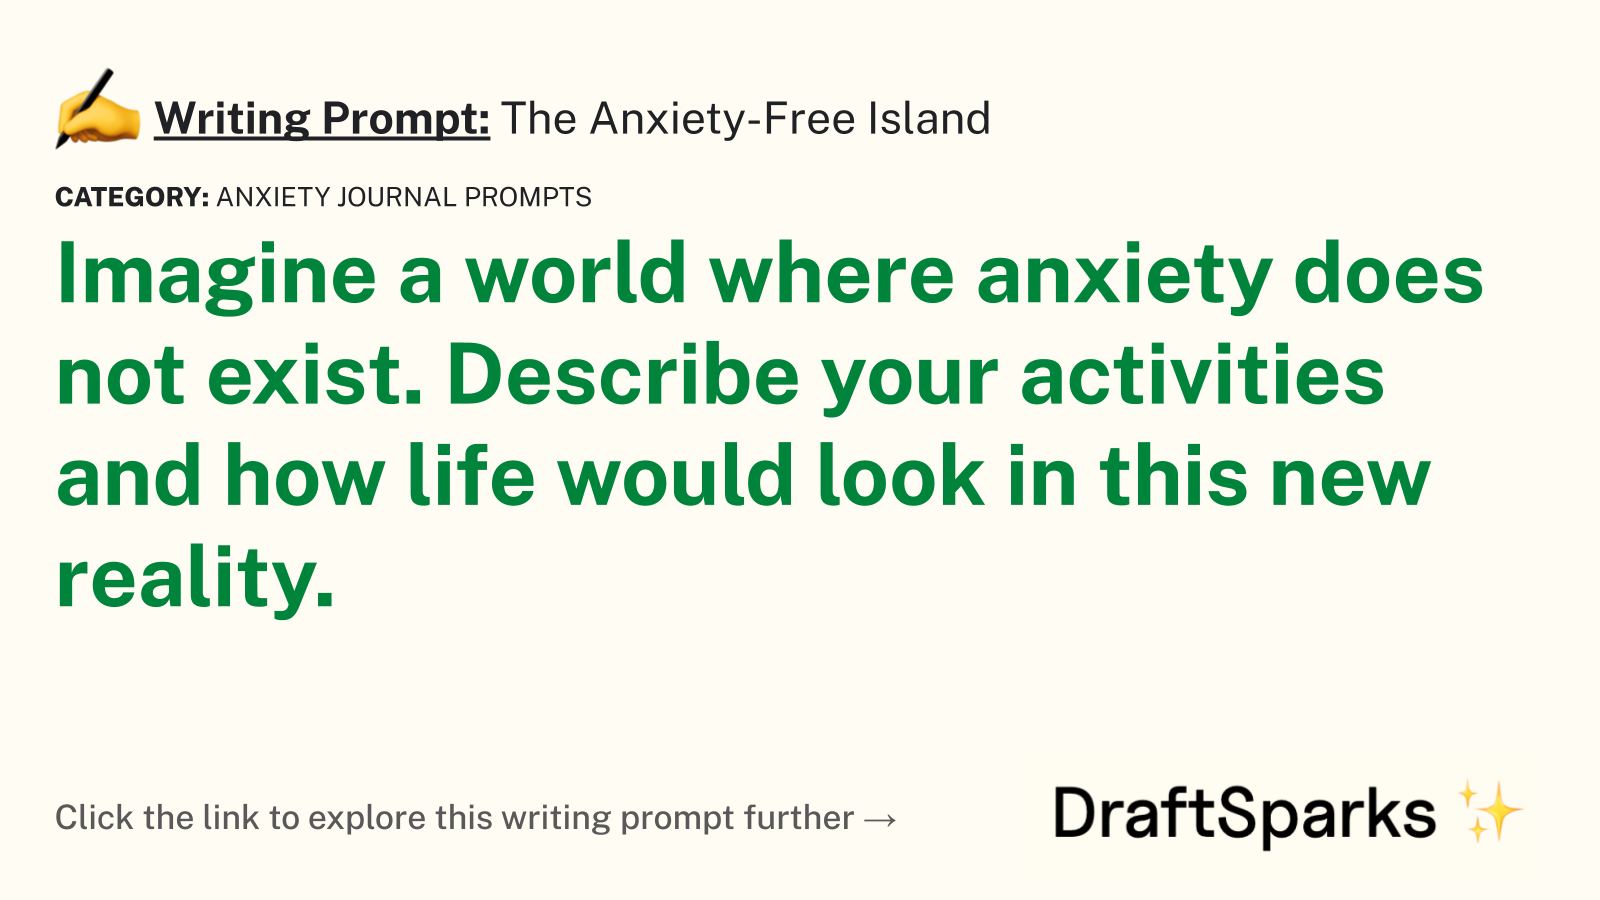 The Anxiety-Free Island